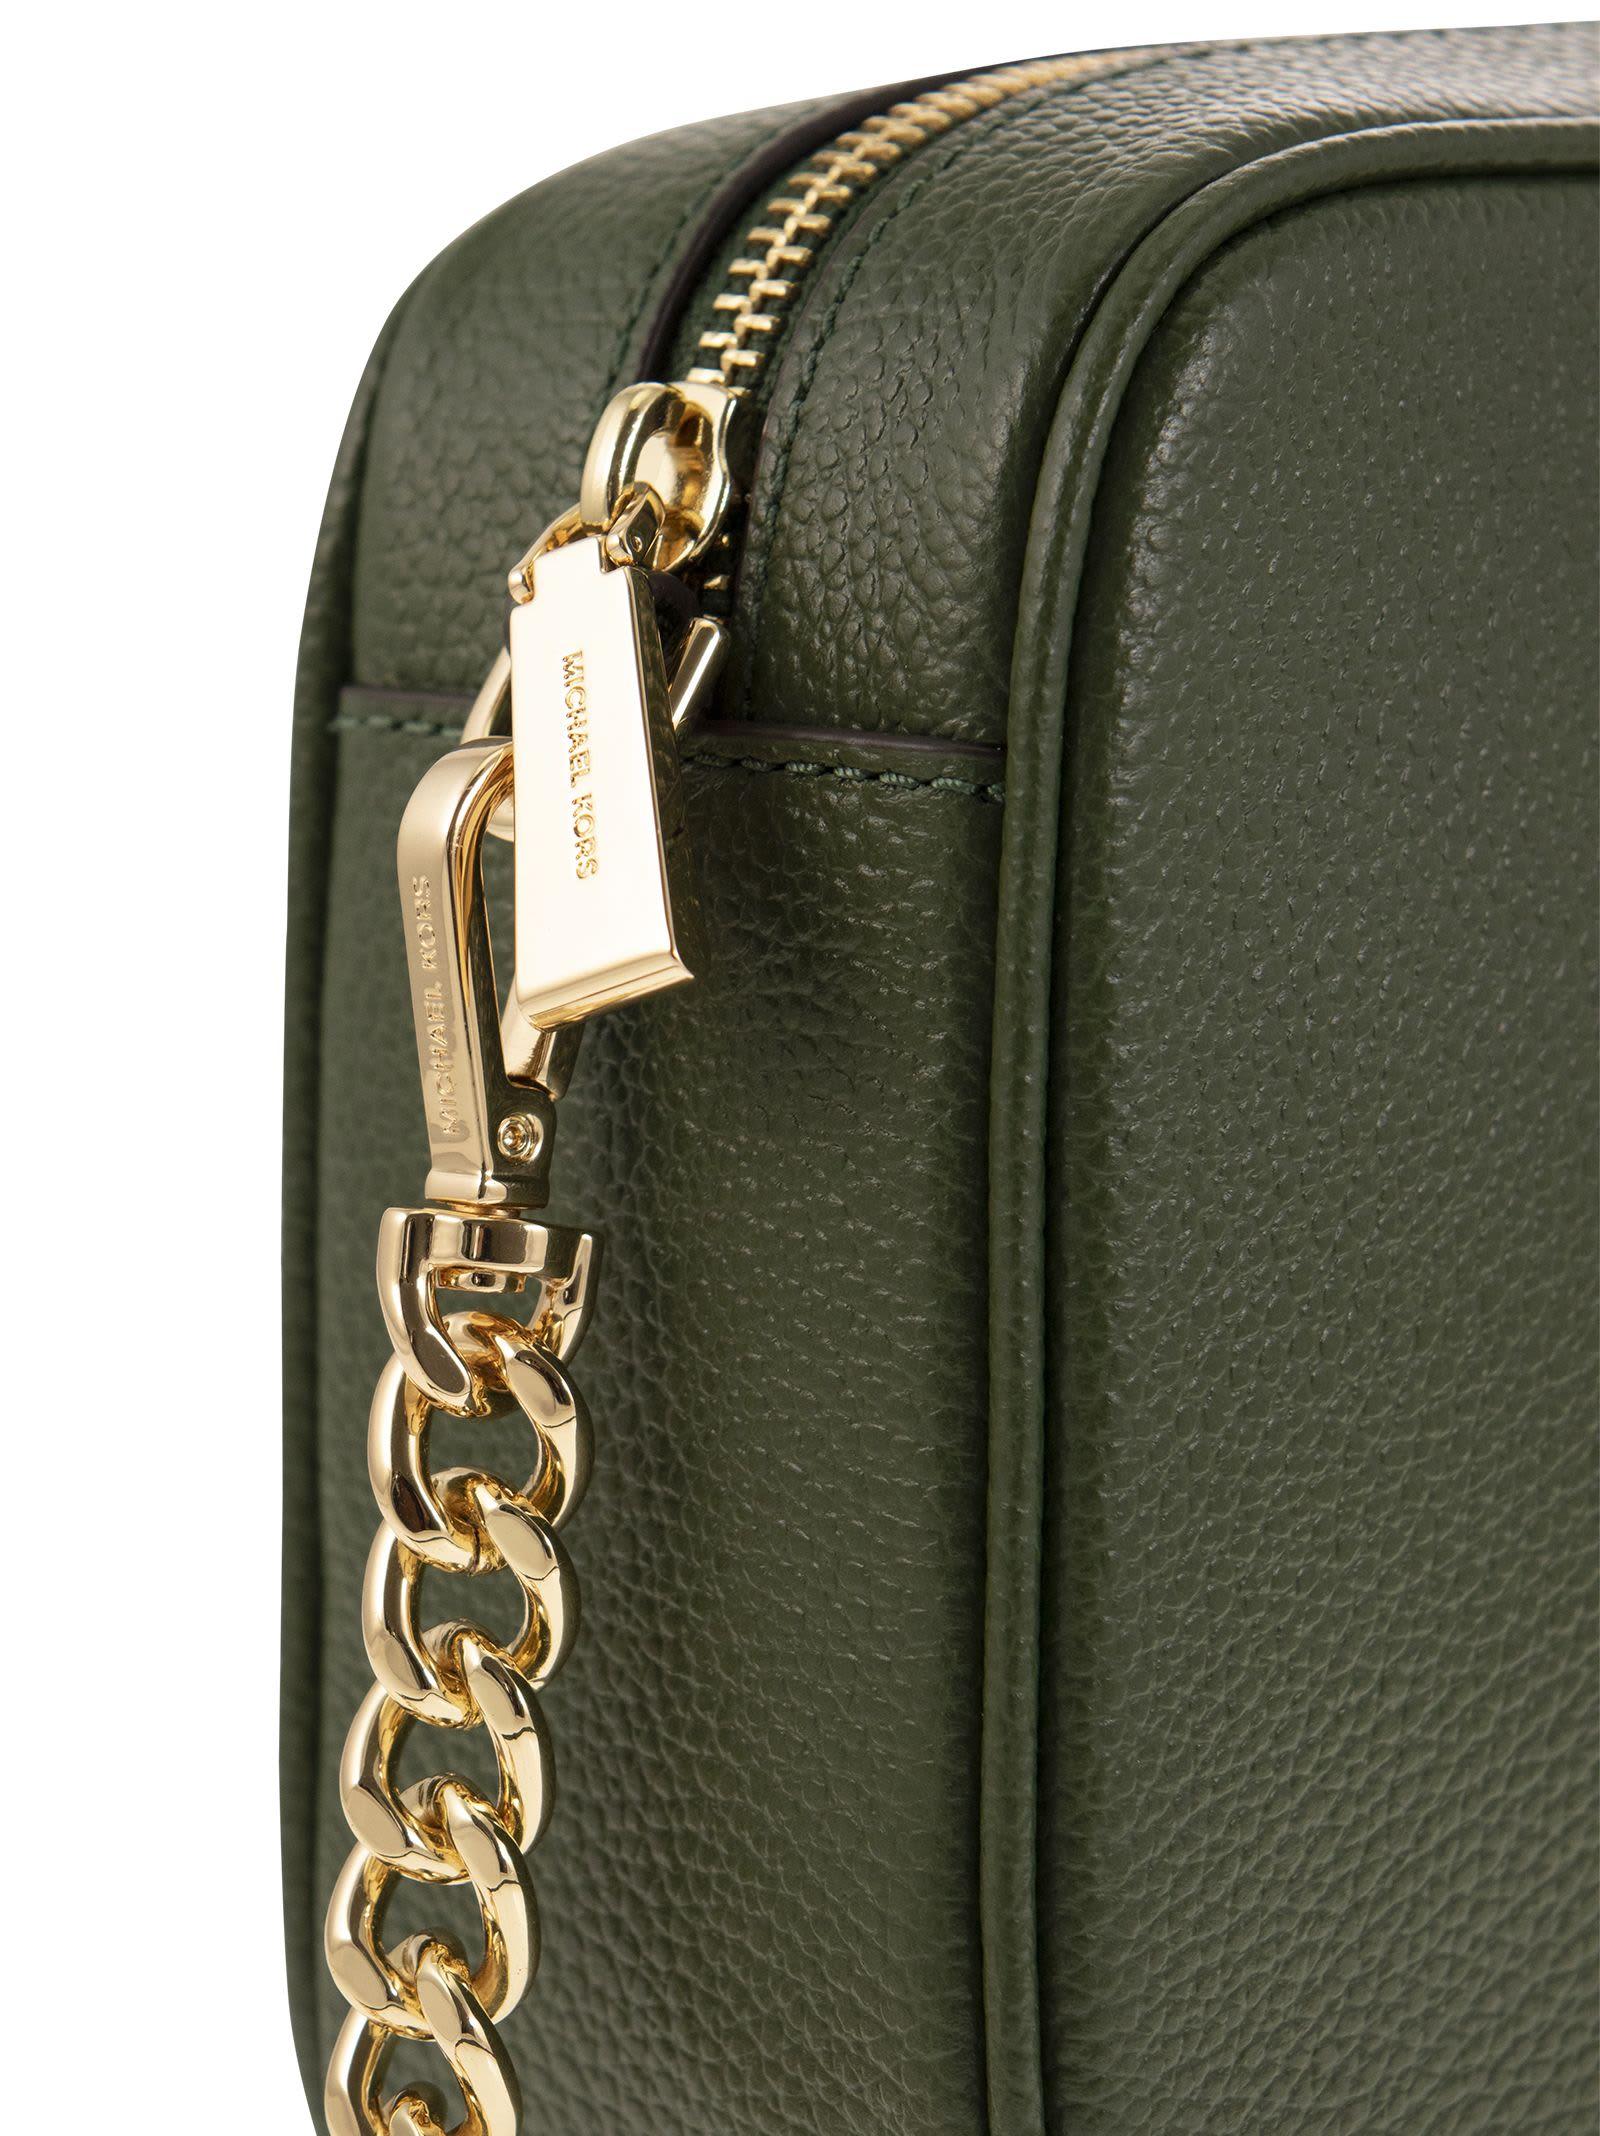 Michael Kors Crossbody Bag ginny Women 32F7GGNM8LSOFTPINK Leather